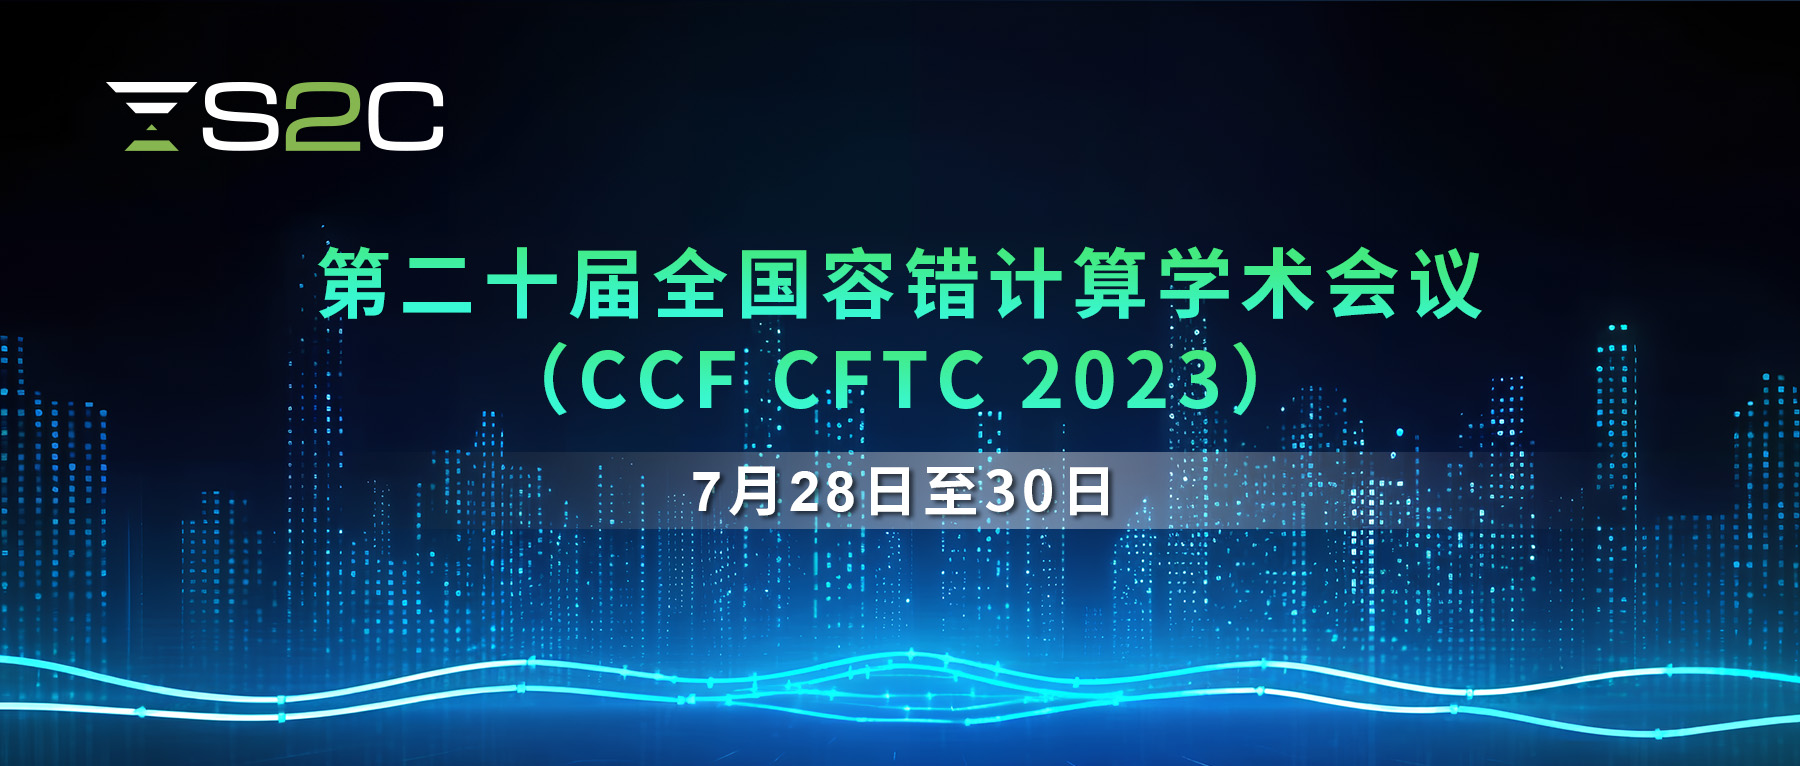 CCF CFTC 2023